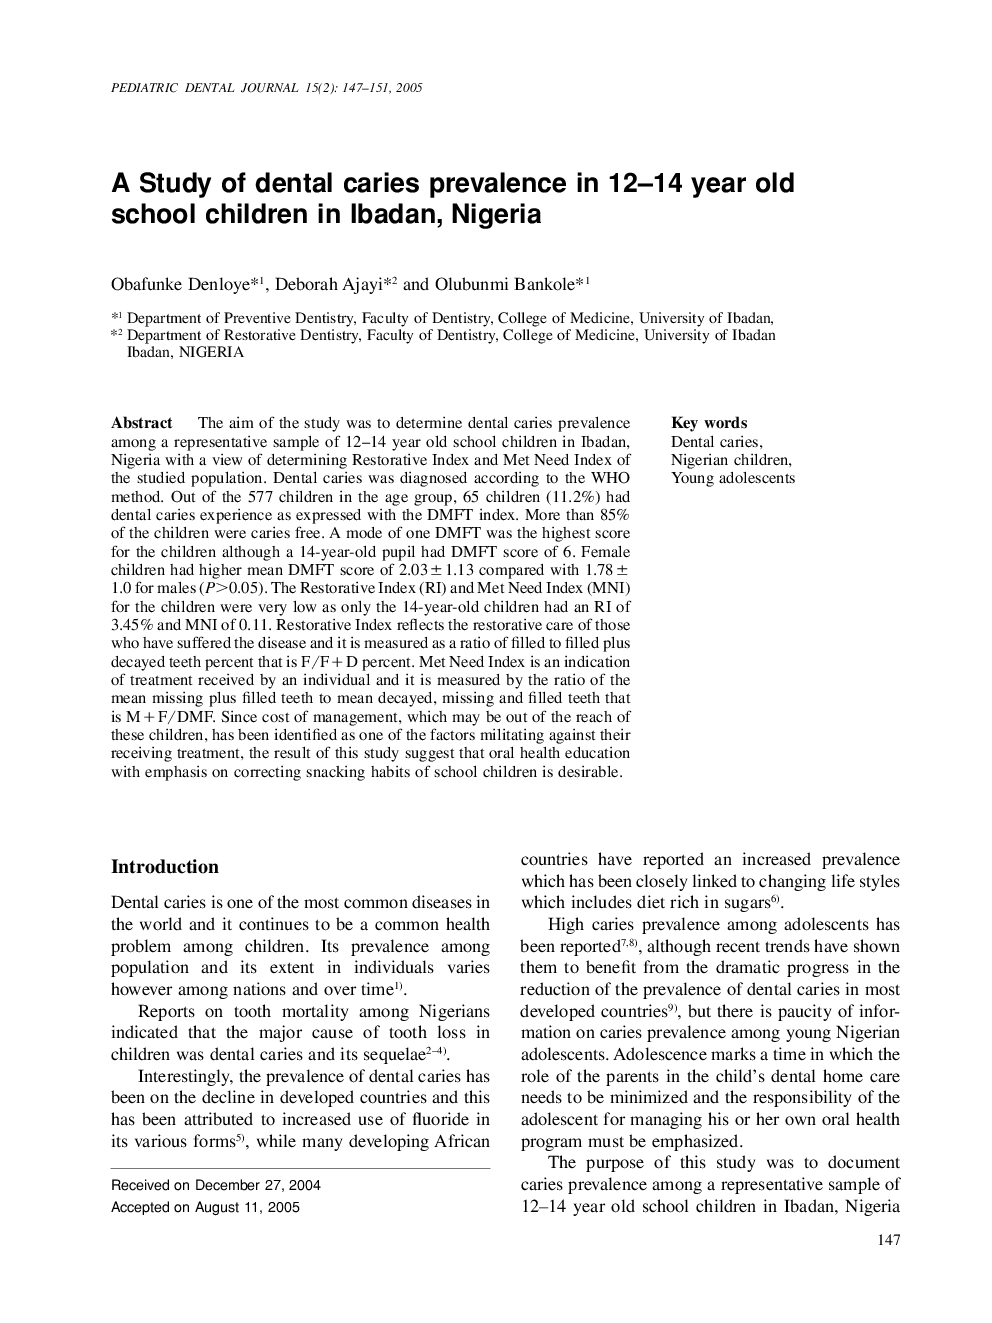 A Study of dental caries prevalence in 12-14 year old school children in Ibadan, Nigeria